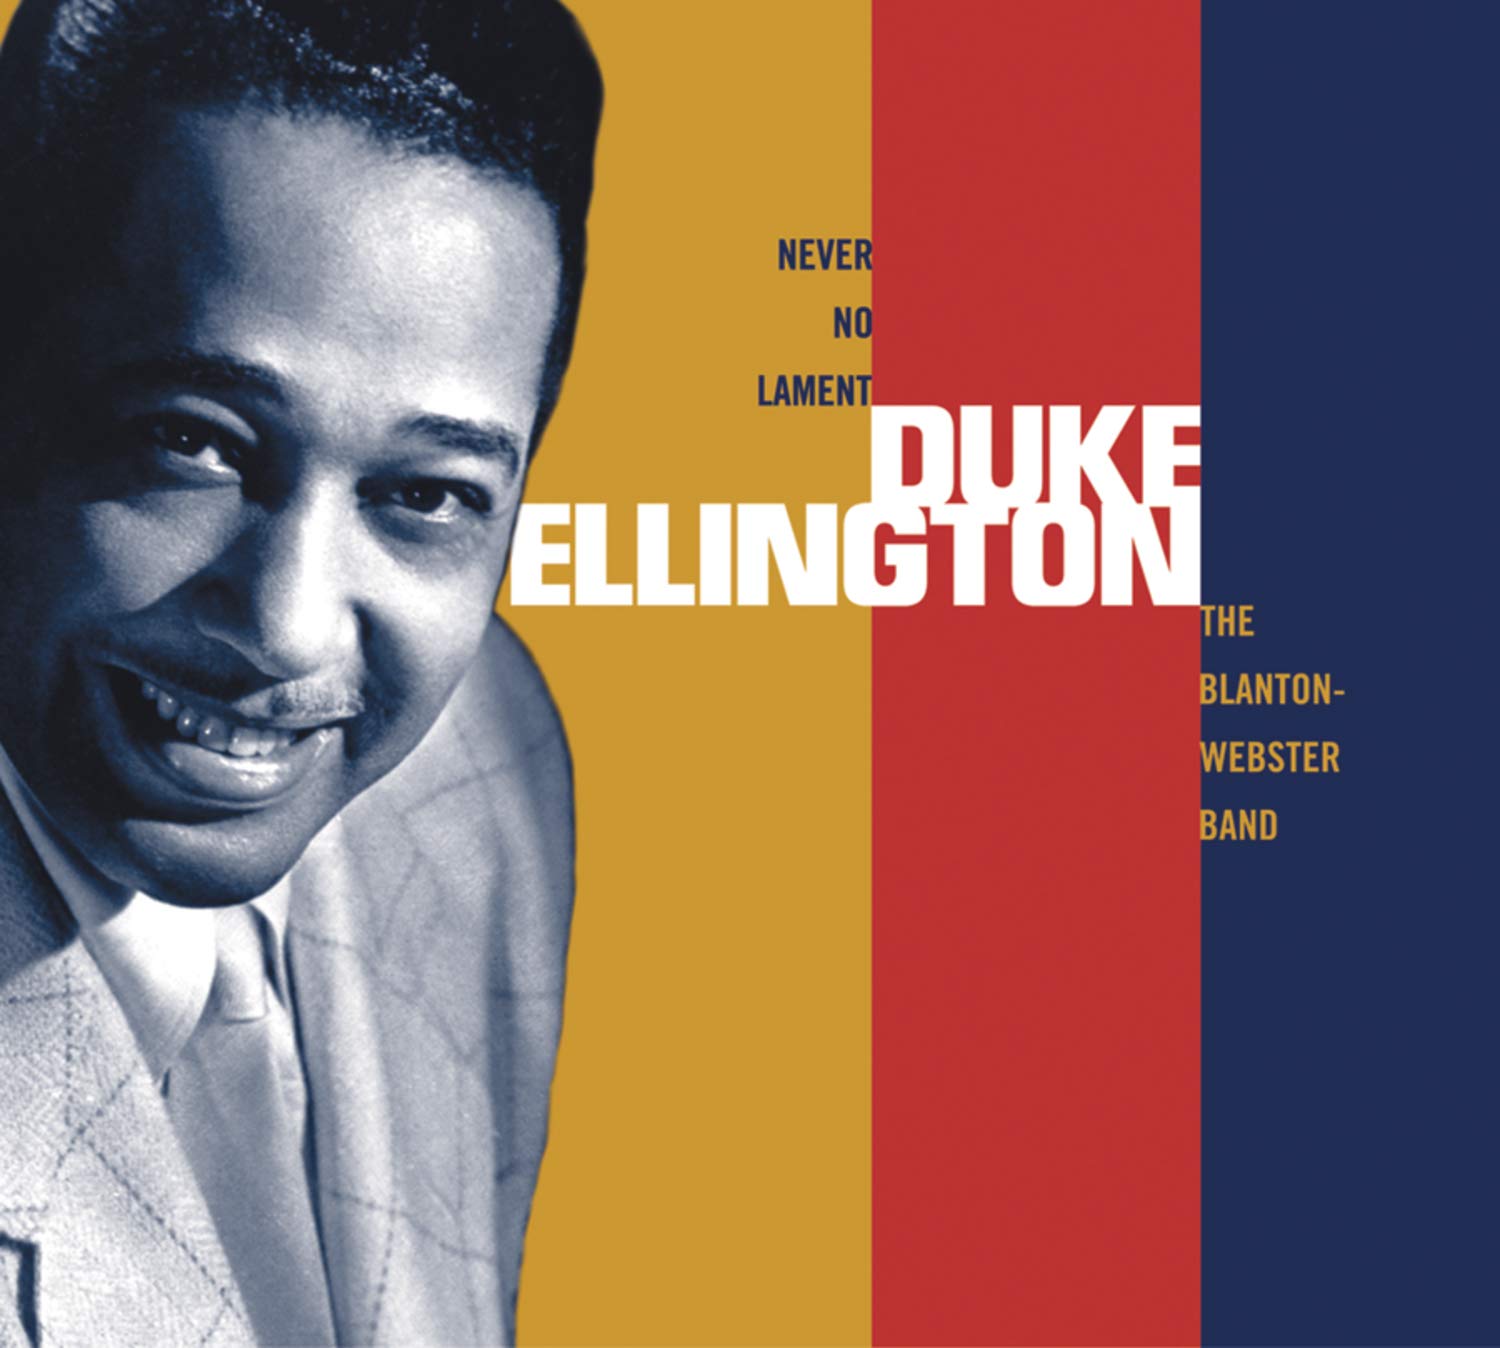 Duke Ellington's Never No Lament album cover